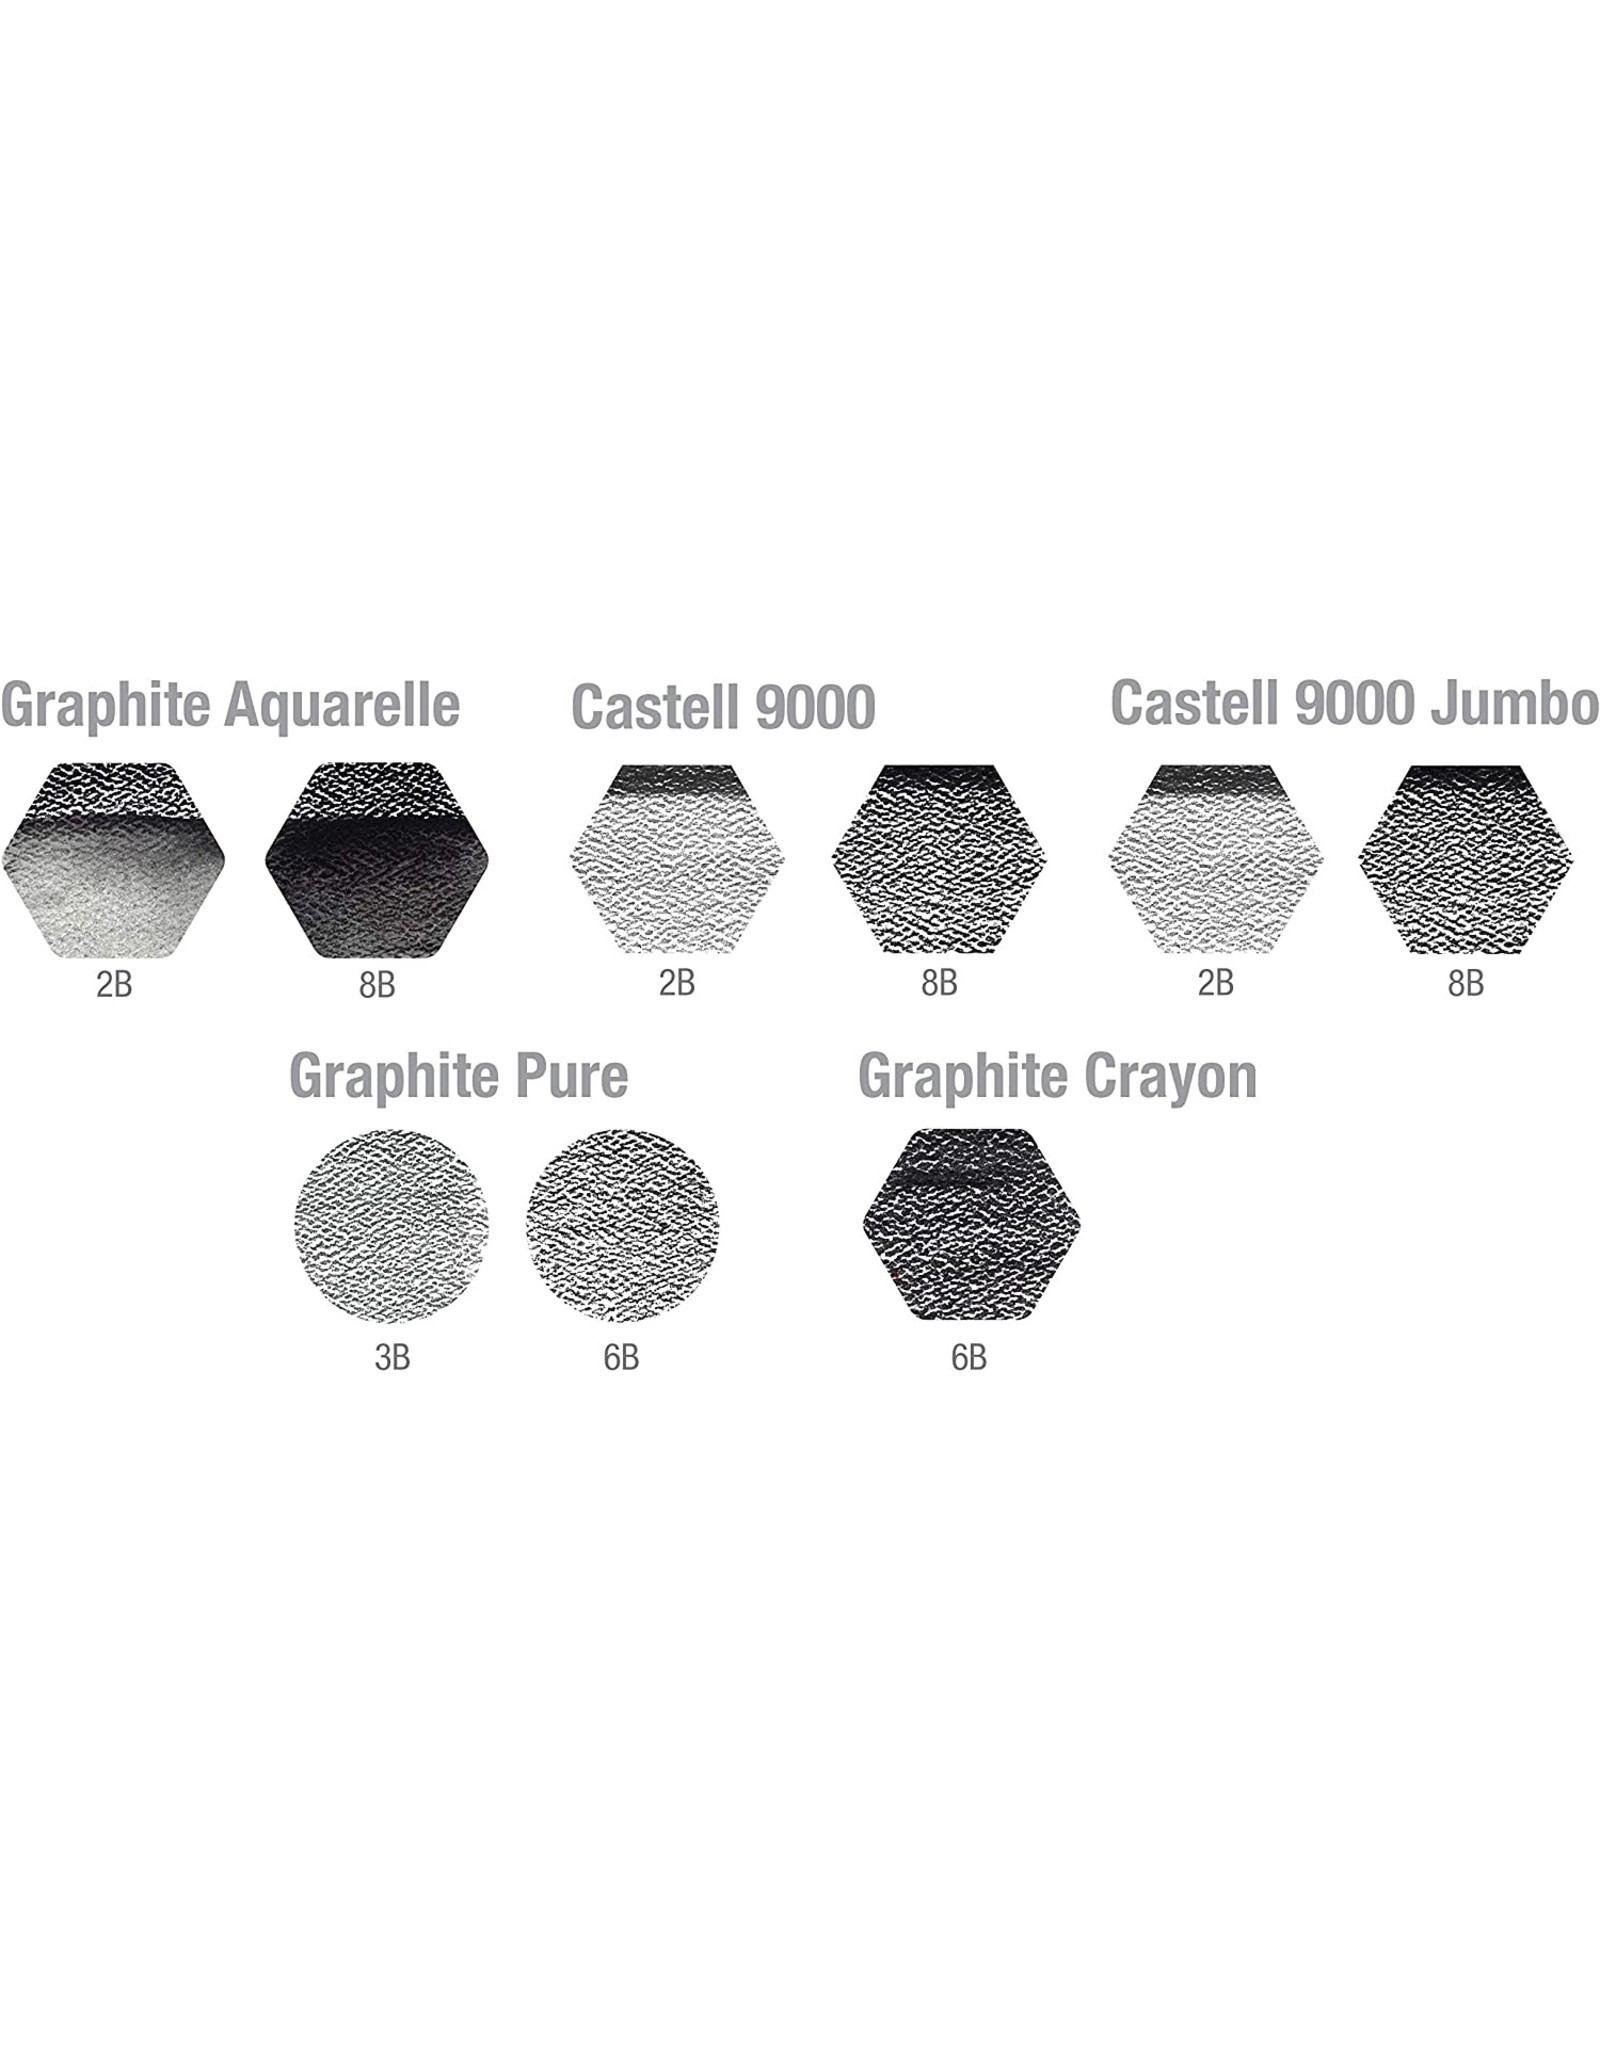 11 Count Graphite Set Tin